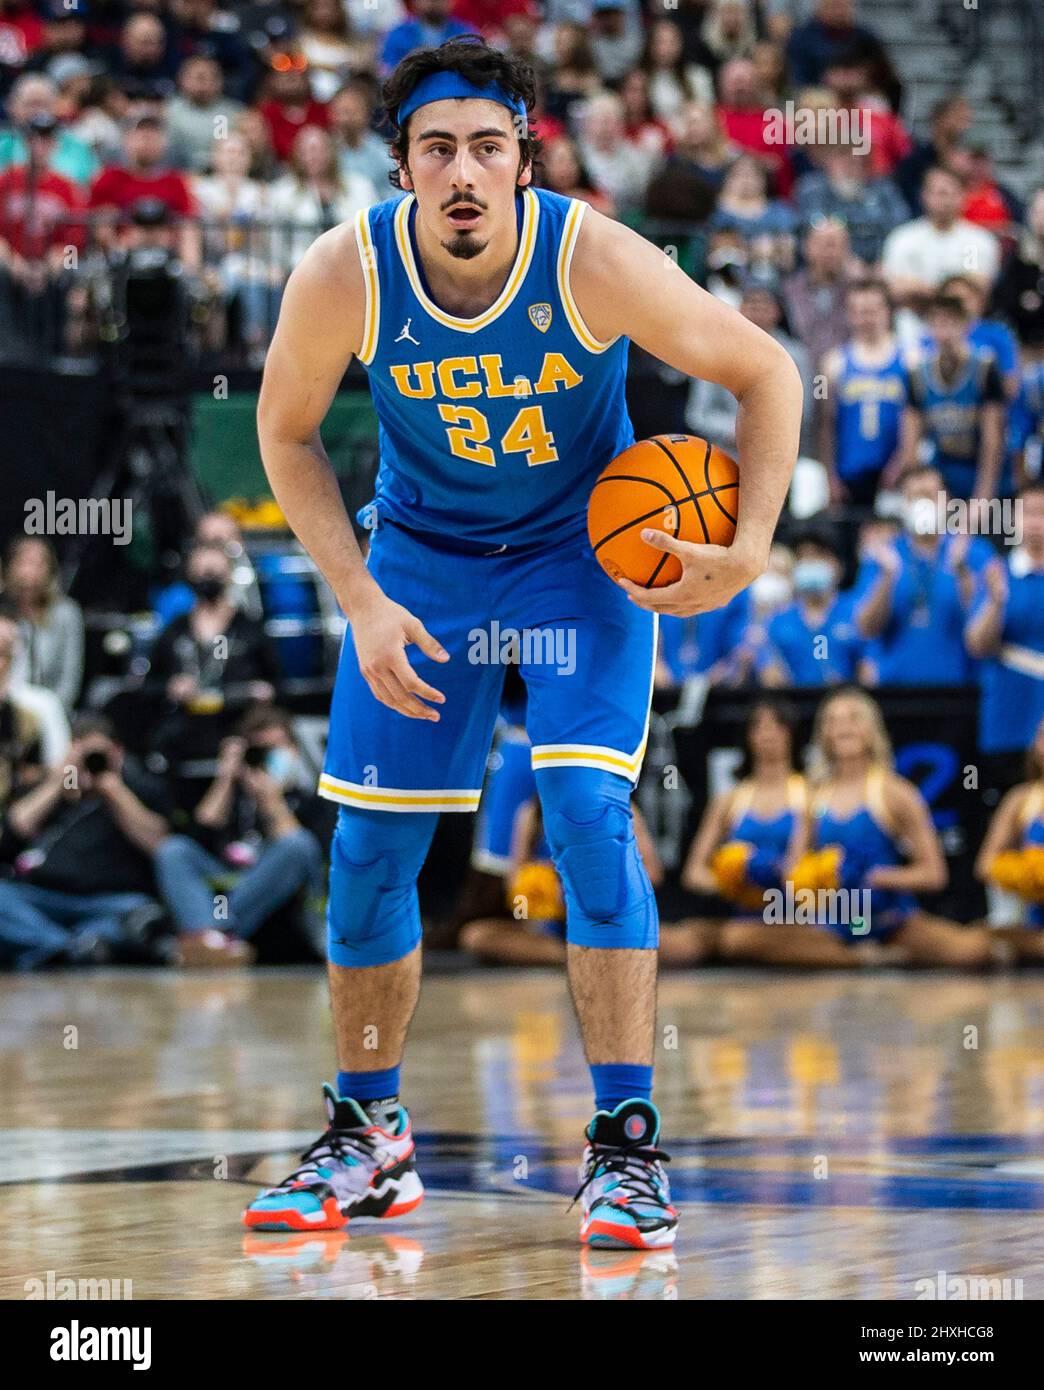 Jaime Jaquez Jr. - Men's Basketball - UCLA